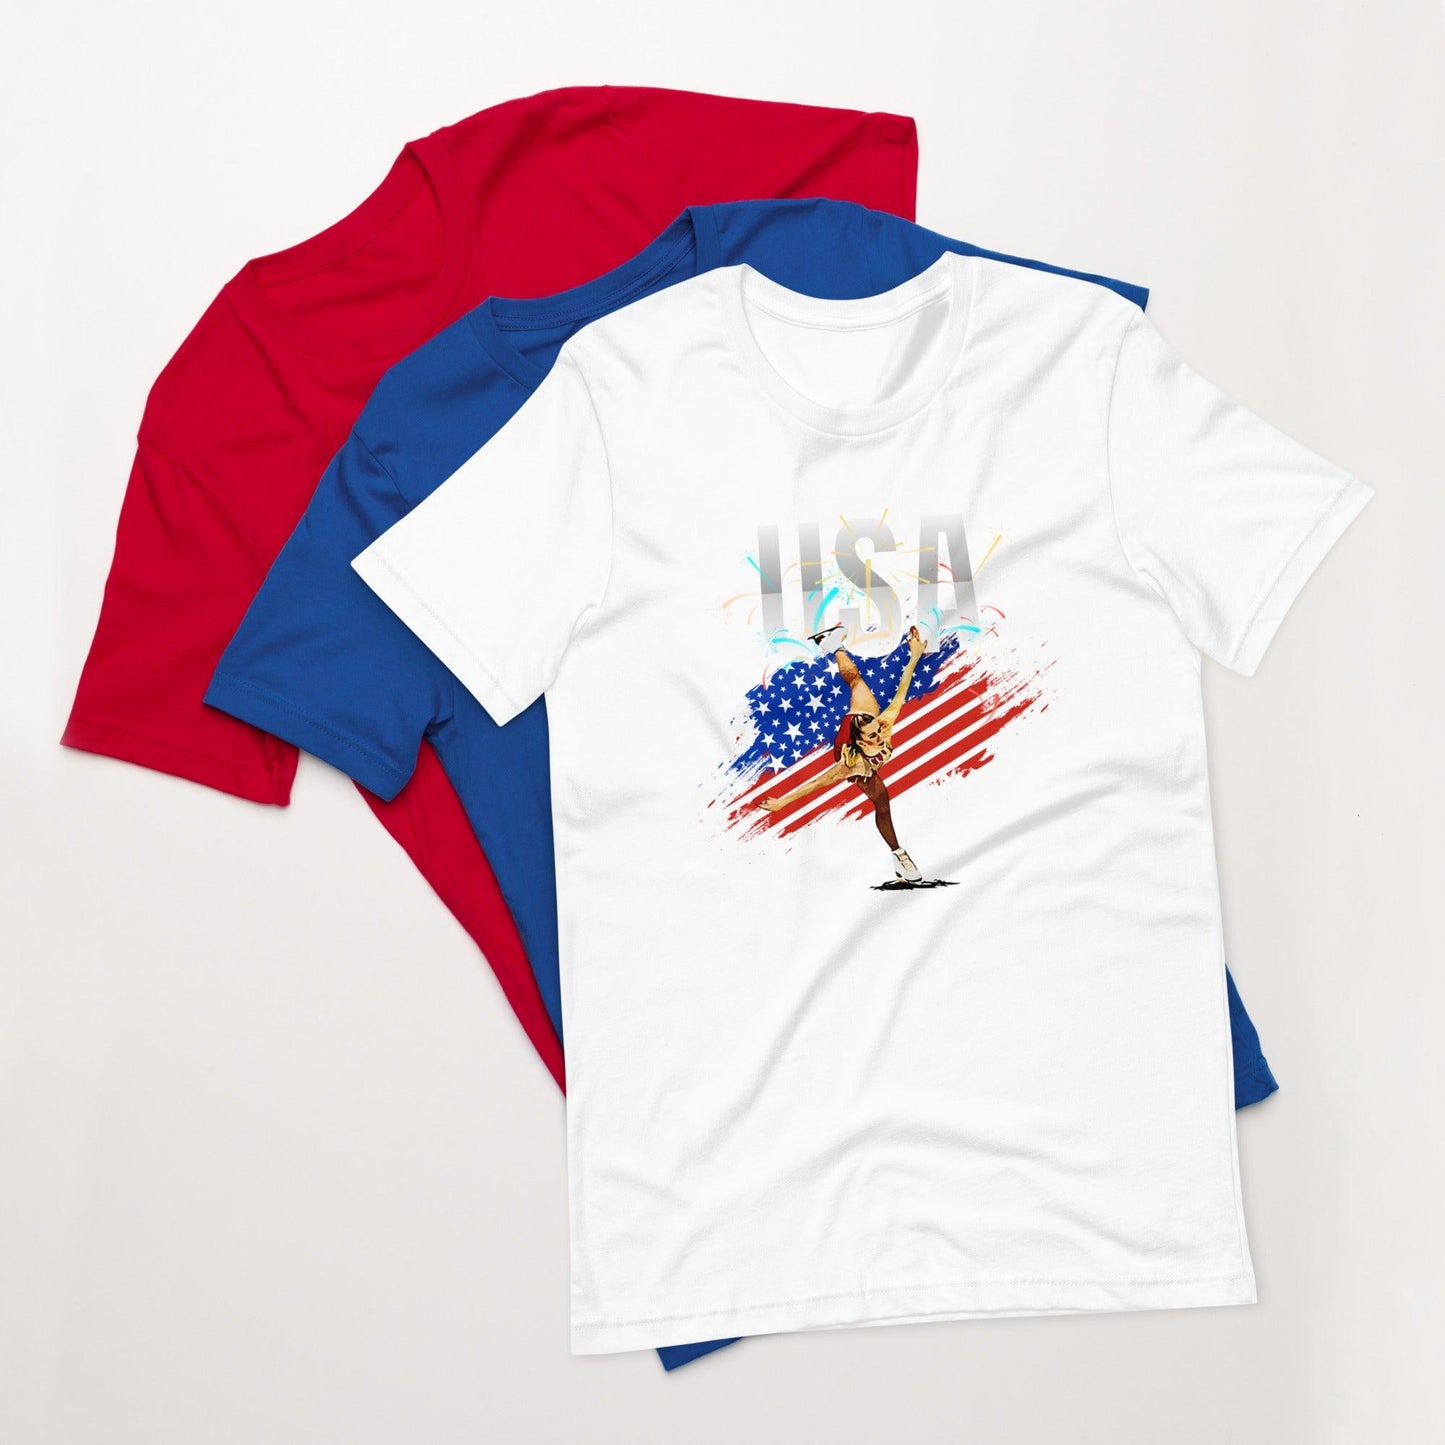 Tonya Harding "USA" Limited Edition T-shirt - Fan Arch